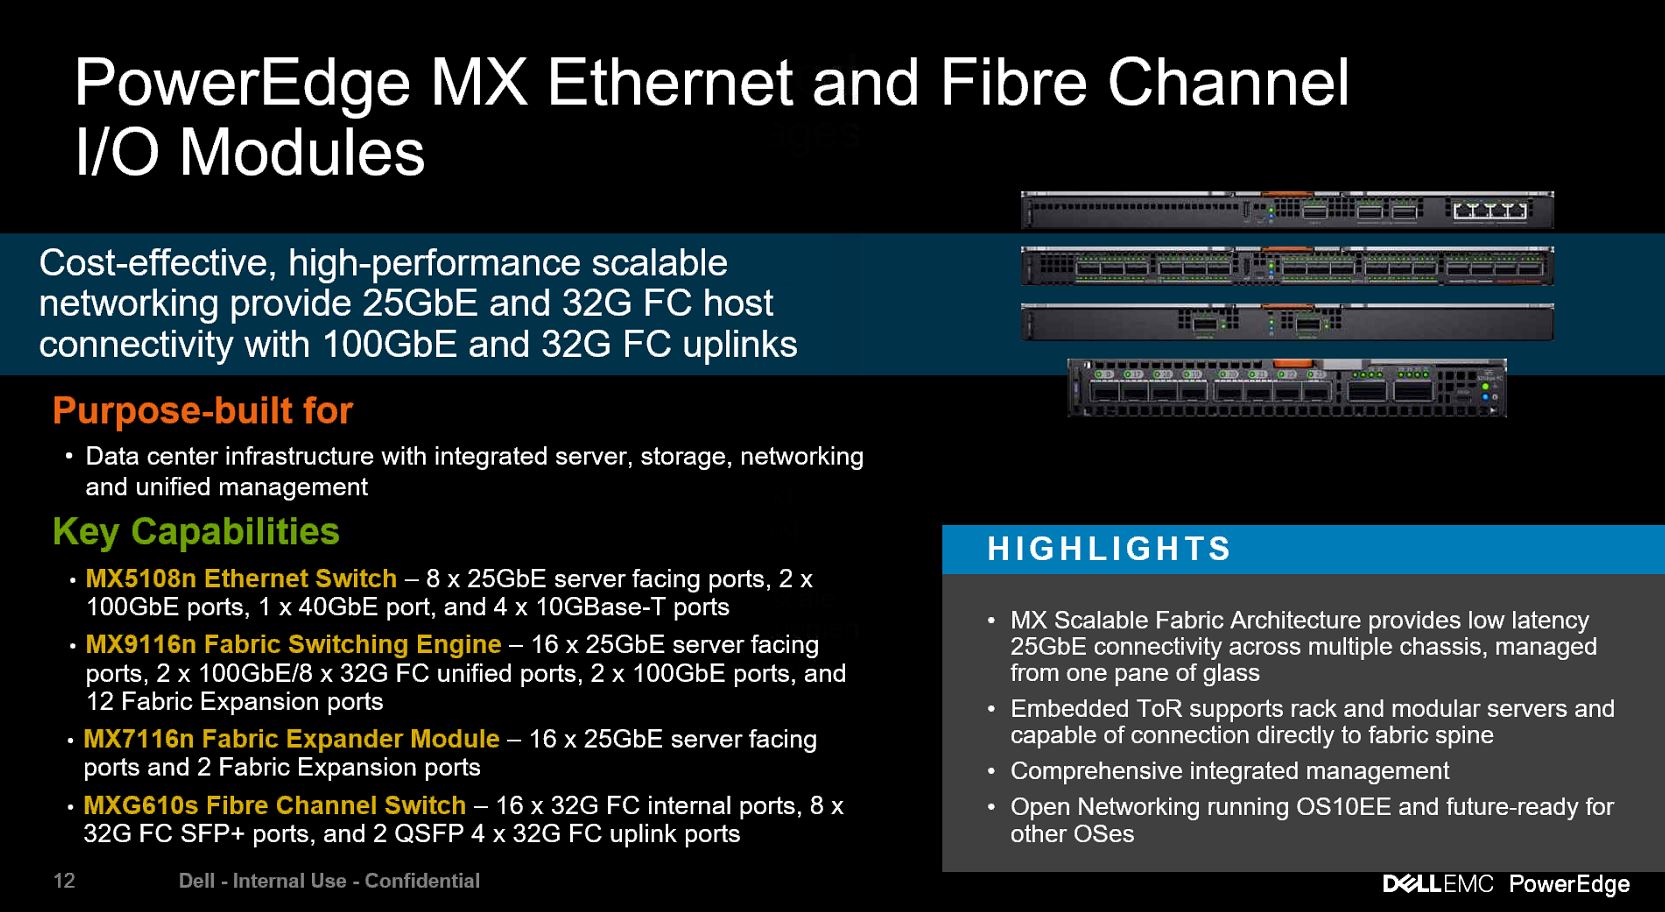 Dell EMC PowerEdge MX Ethernet And Fibre Channel Modules